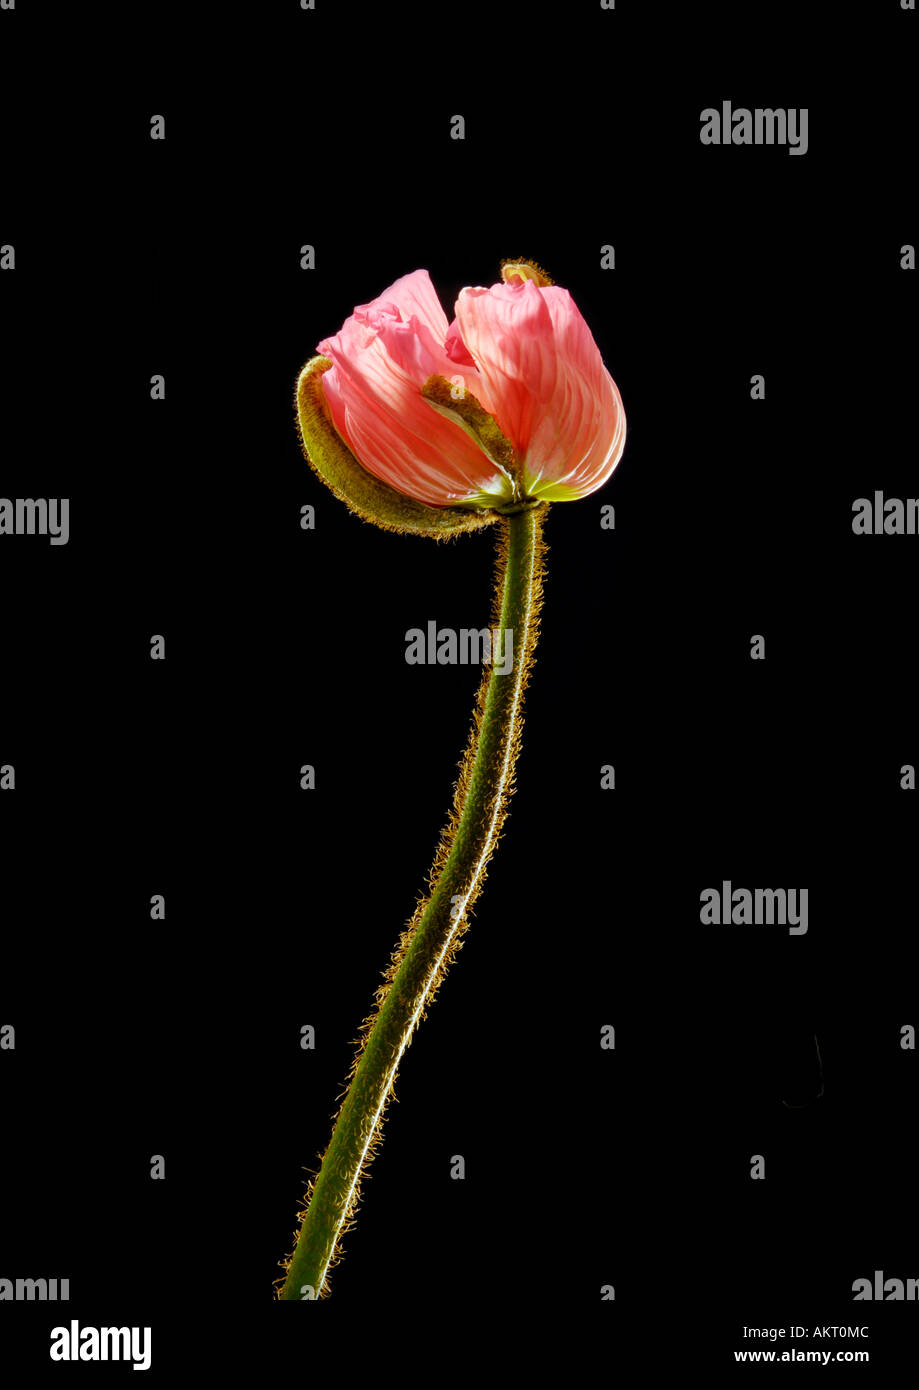 big great huge poppi flower capsule sagger sleep poppy paper paperis blossom Papaver on black Stock Photo